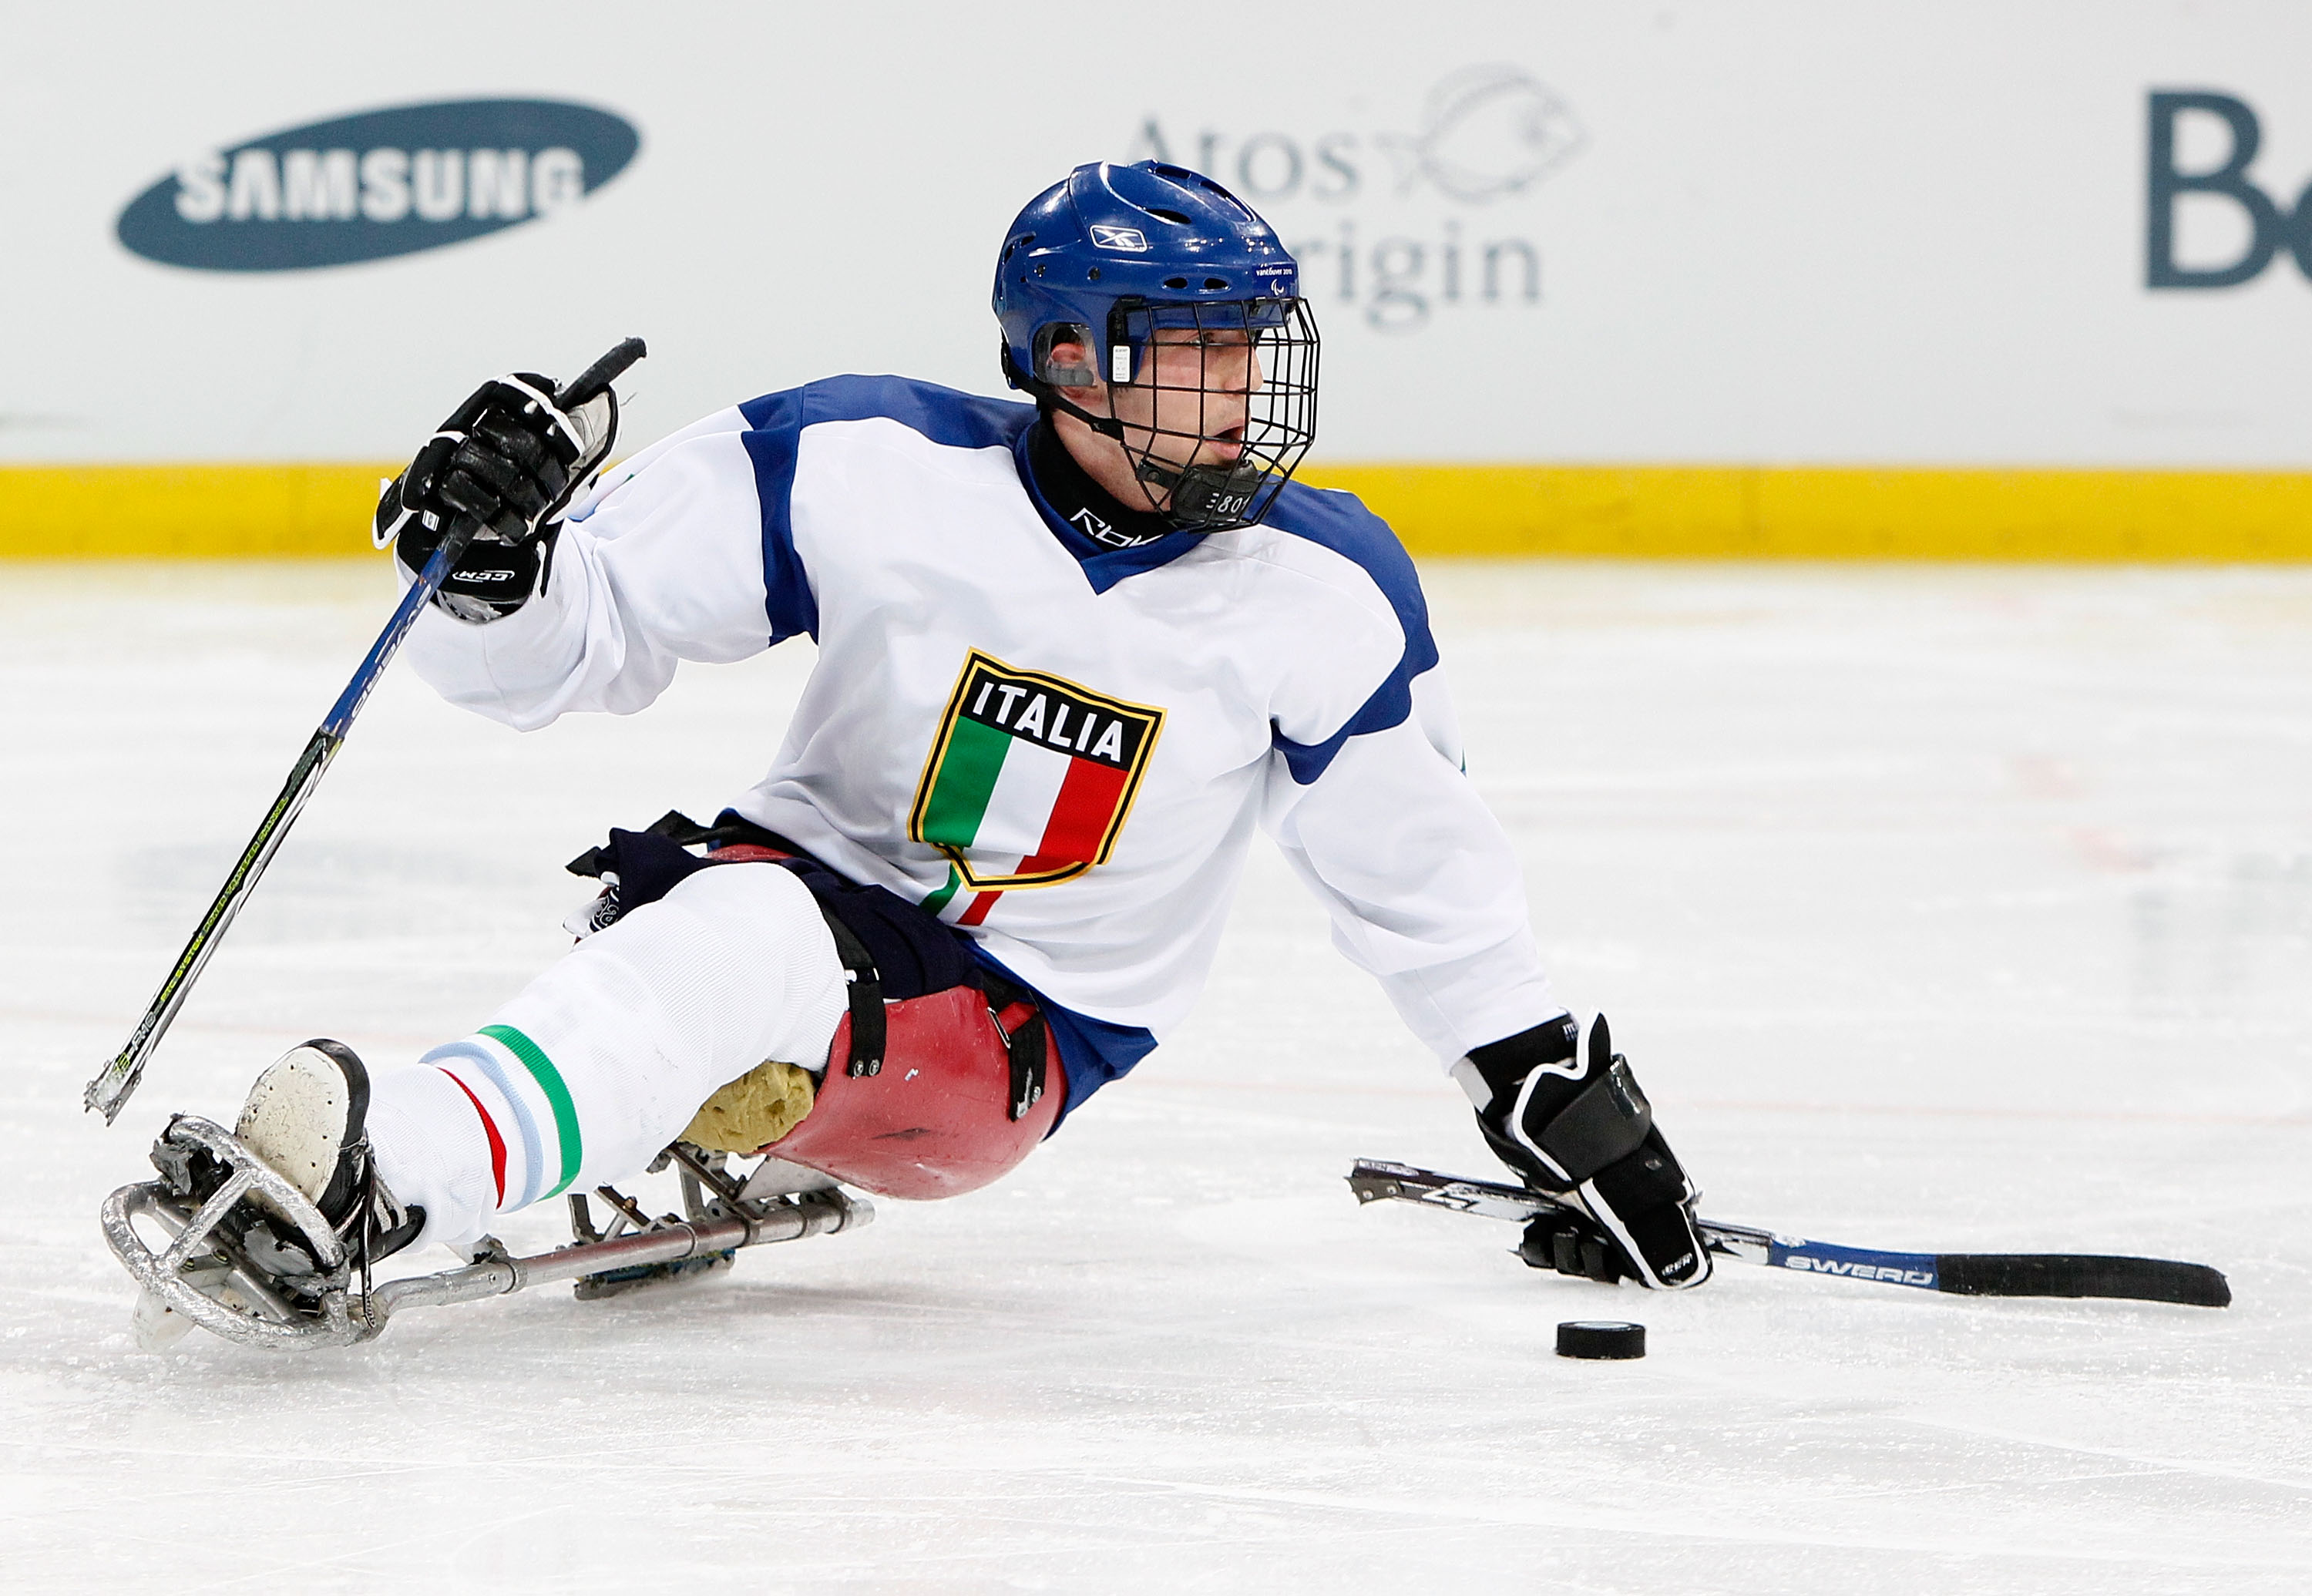 Italy prepare for ‘toughest sledge hockey Europeans ever’